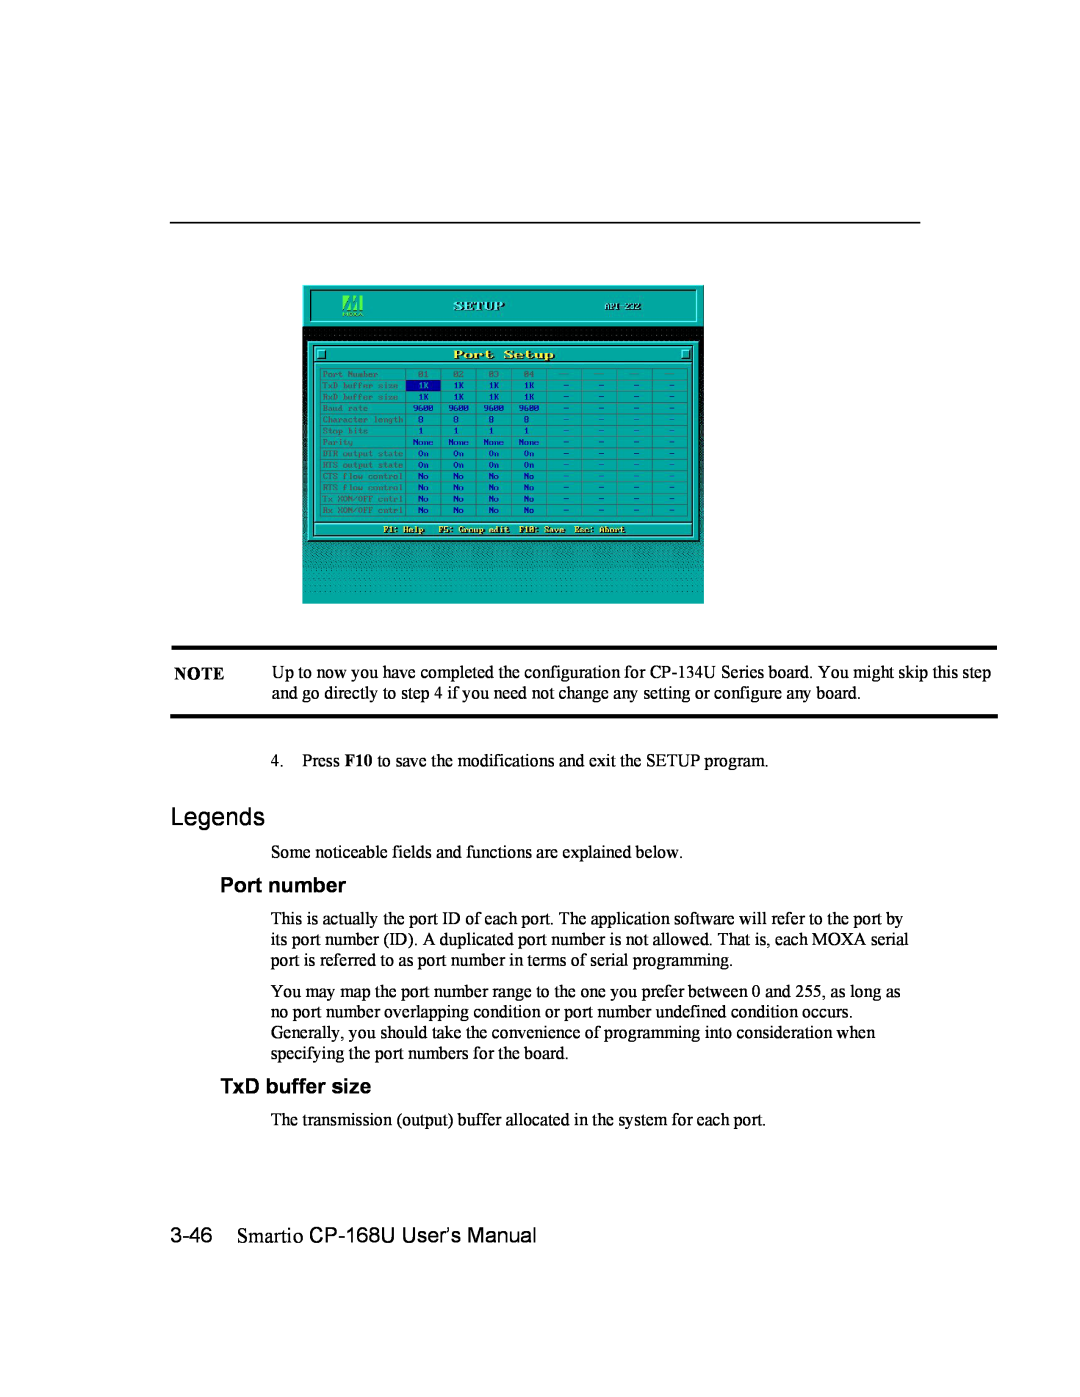 Moxa Technologies user manual Legends, Smartio CP-168U User’s Manual, Port number, TxD buffer size 